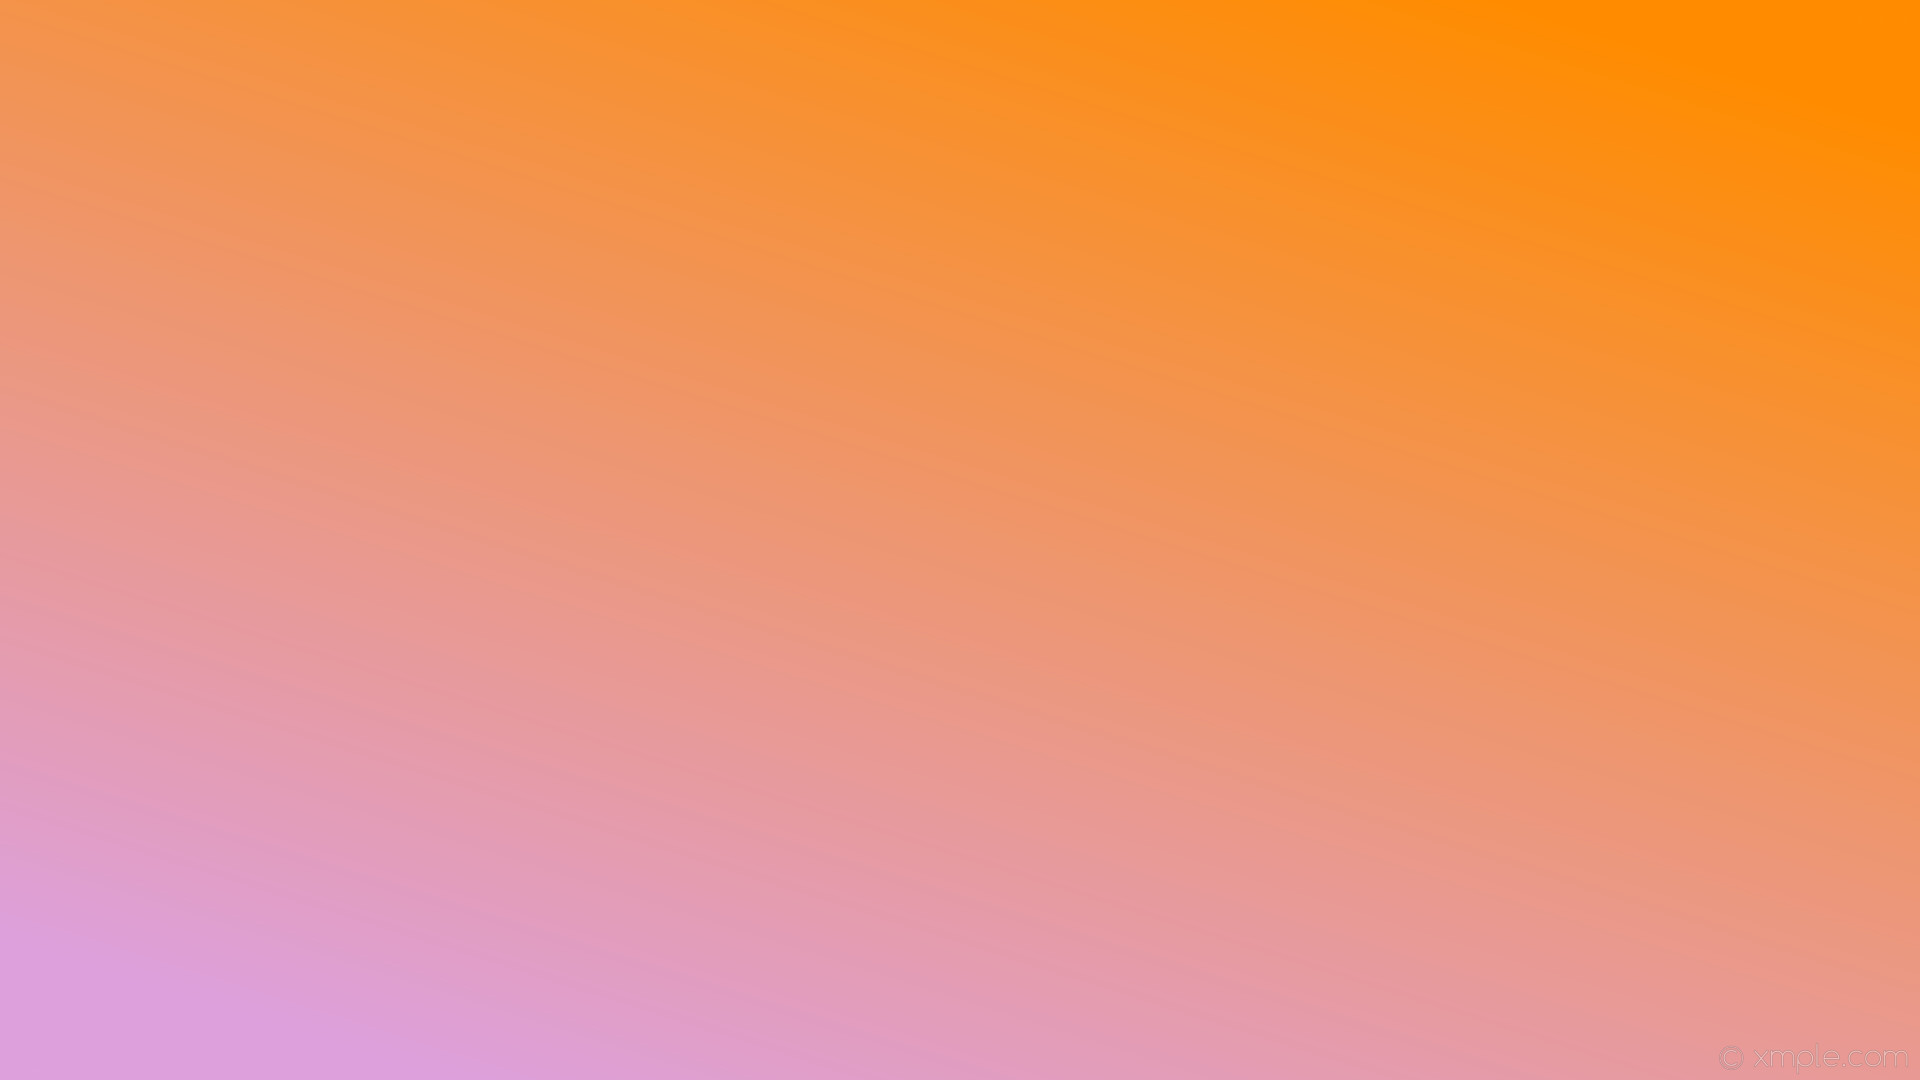 Wallpaper Linear Purple Orange Gradient Plum Dark Orange Dda0dd Ff8c00 225 1920x1080